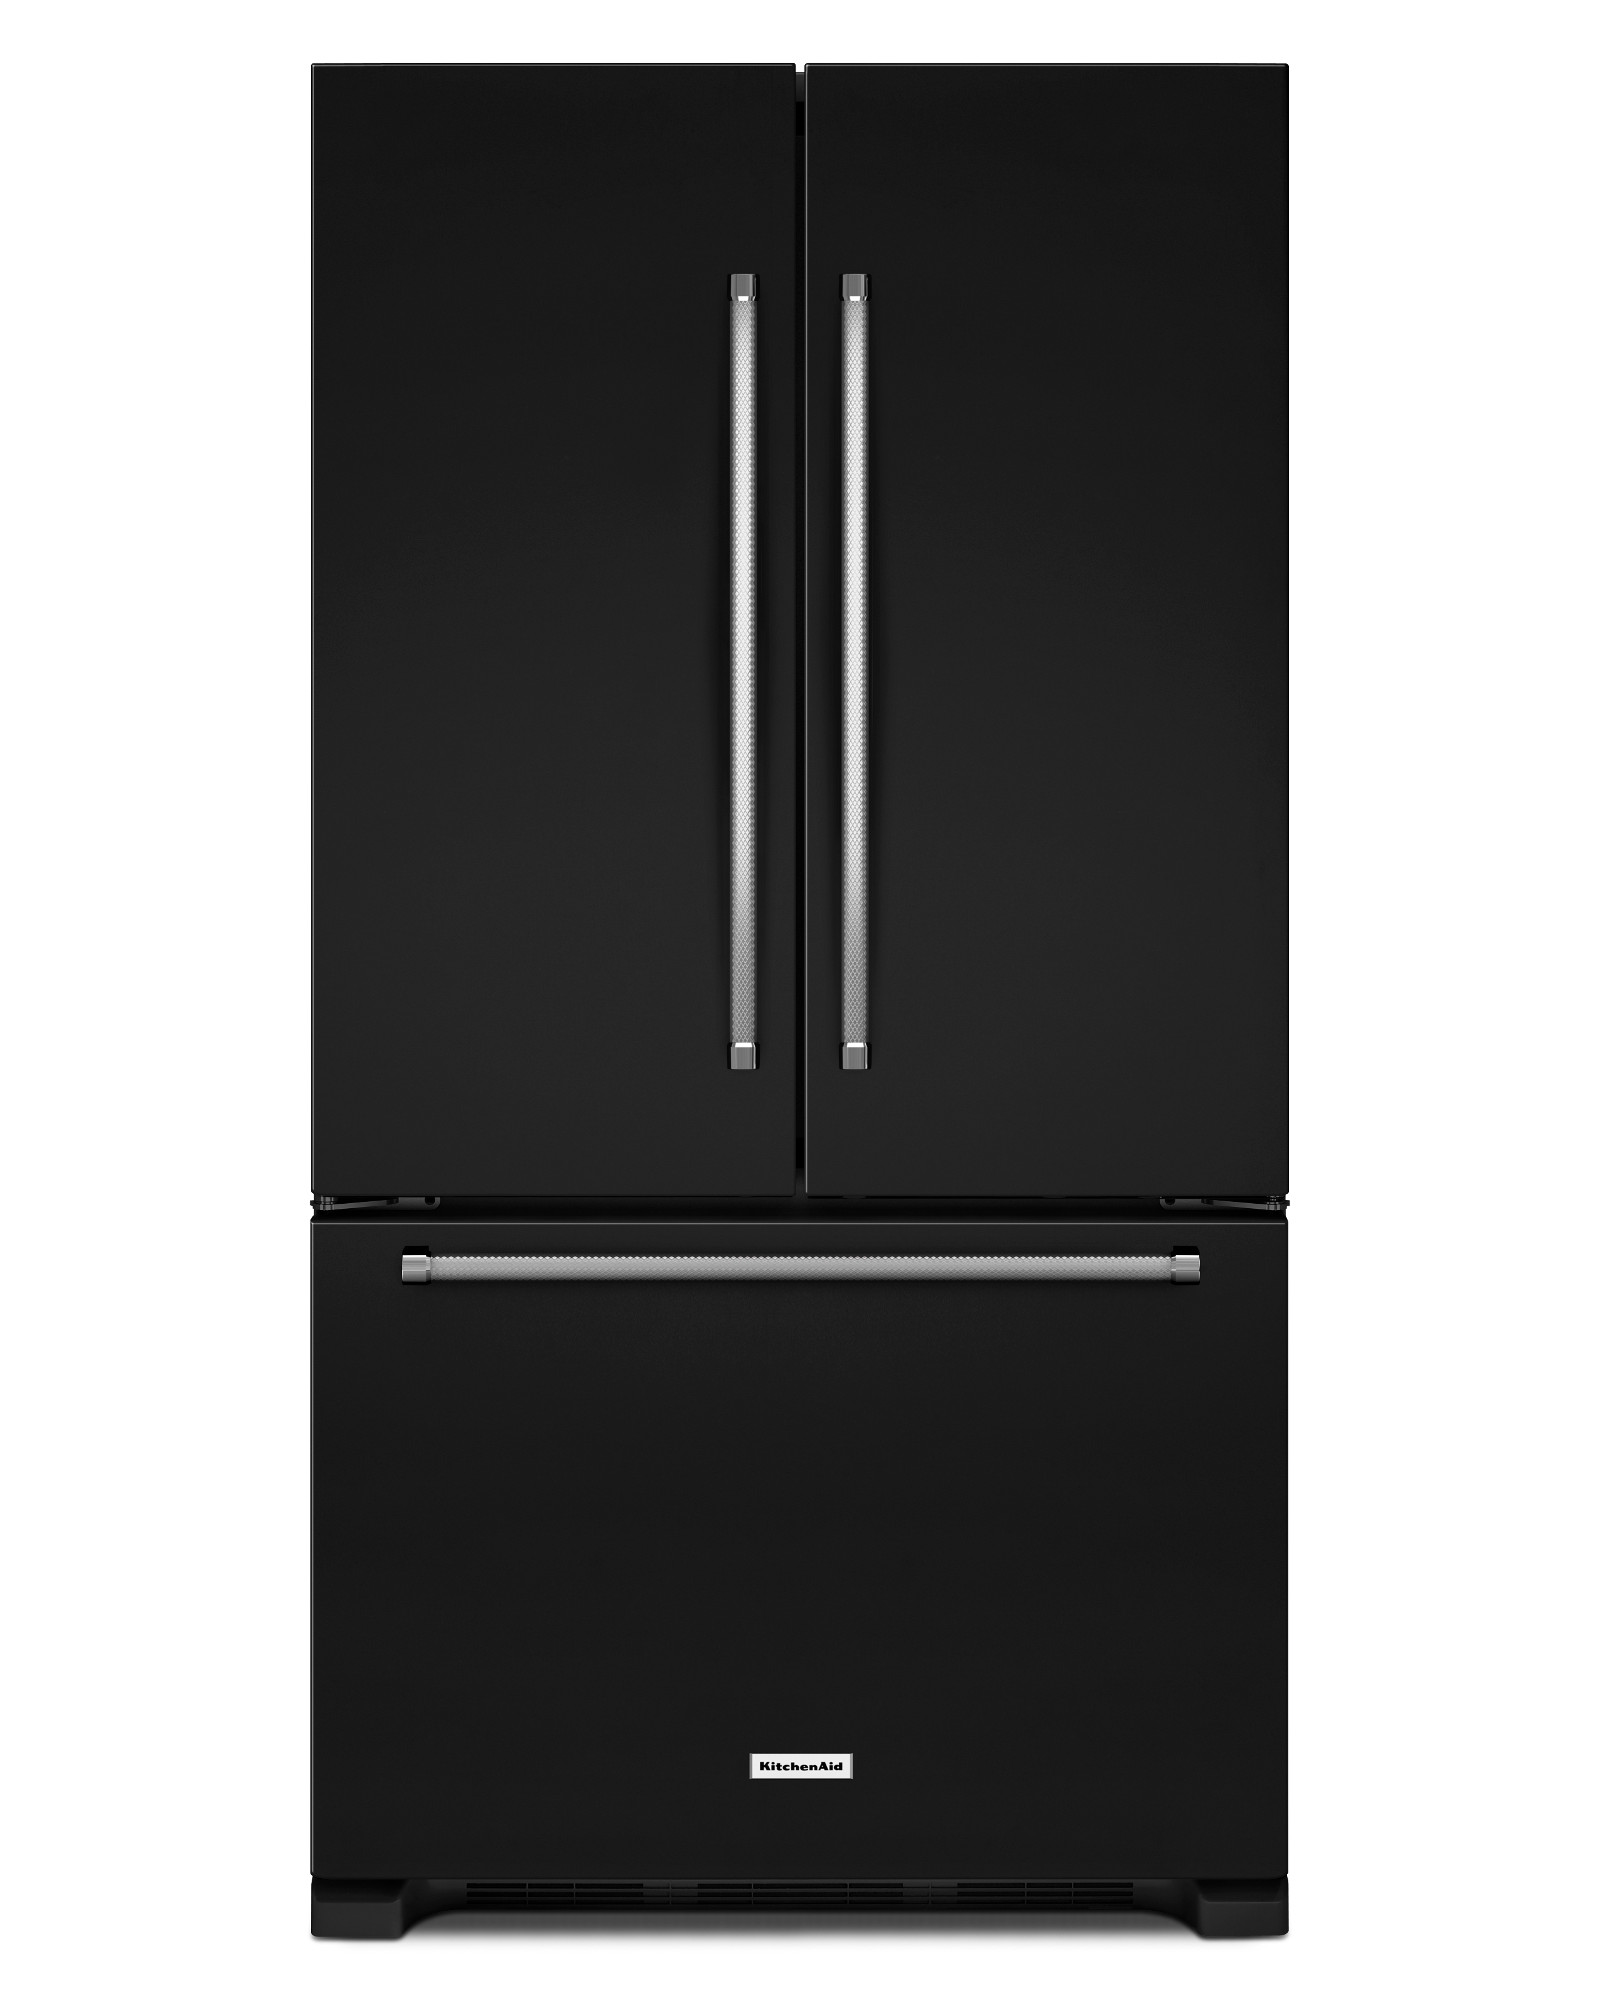 Kitchenaid refrigerators black counter depth